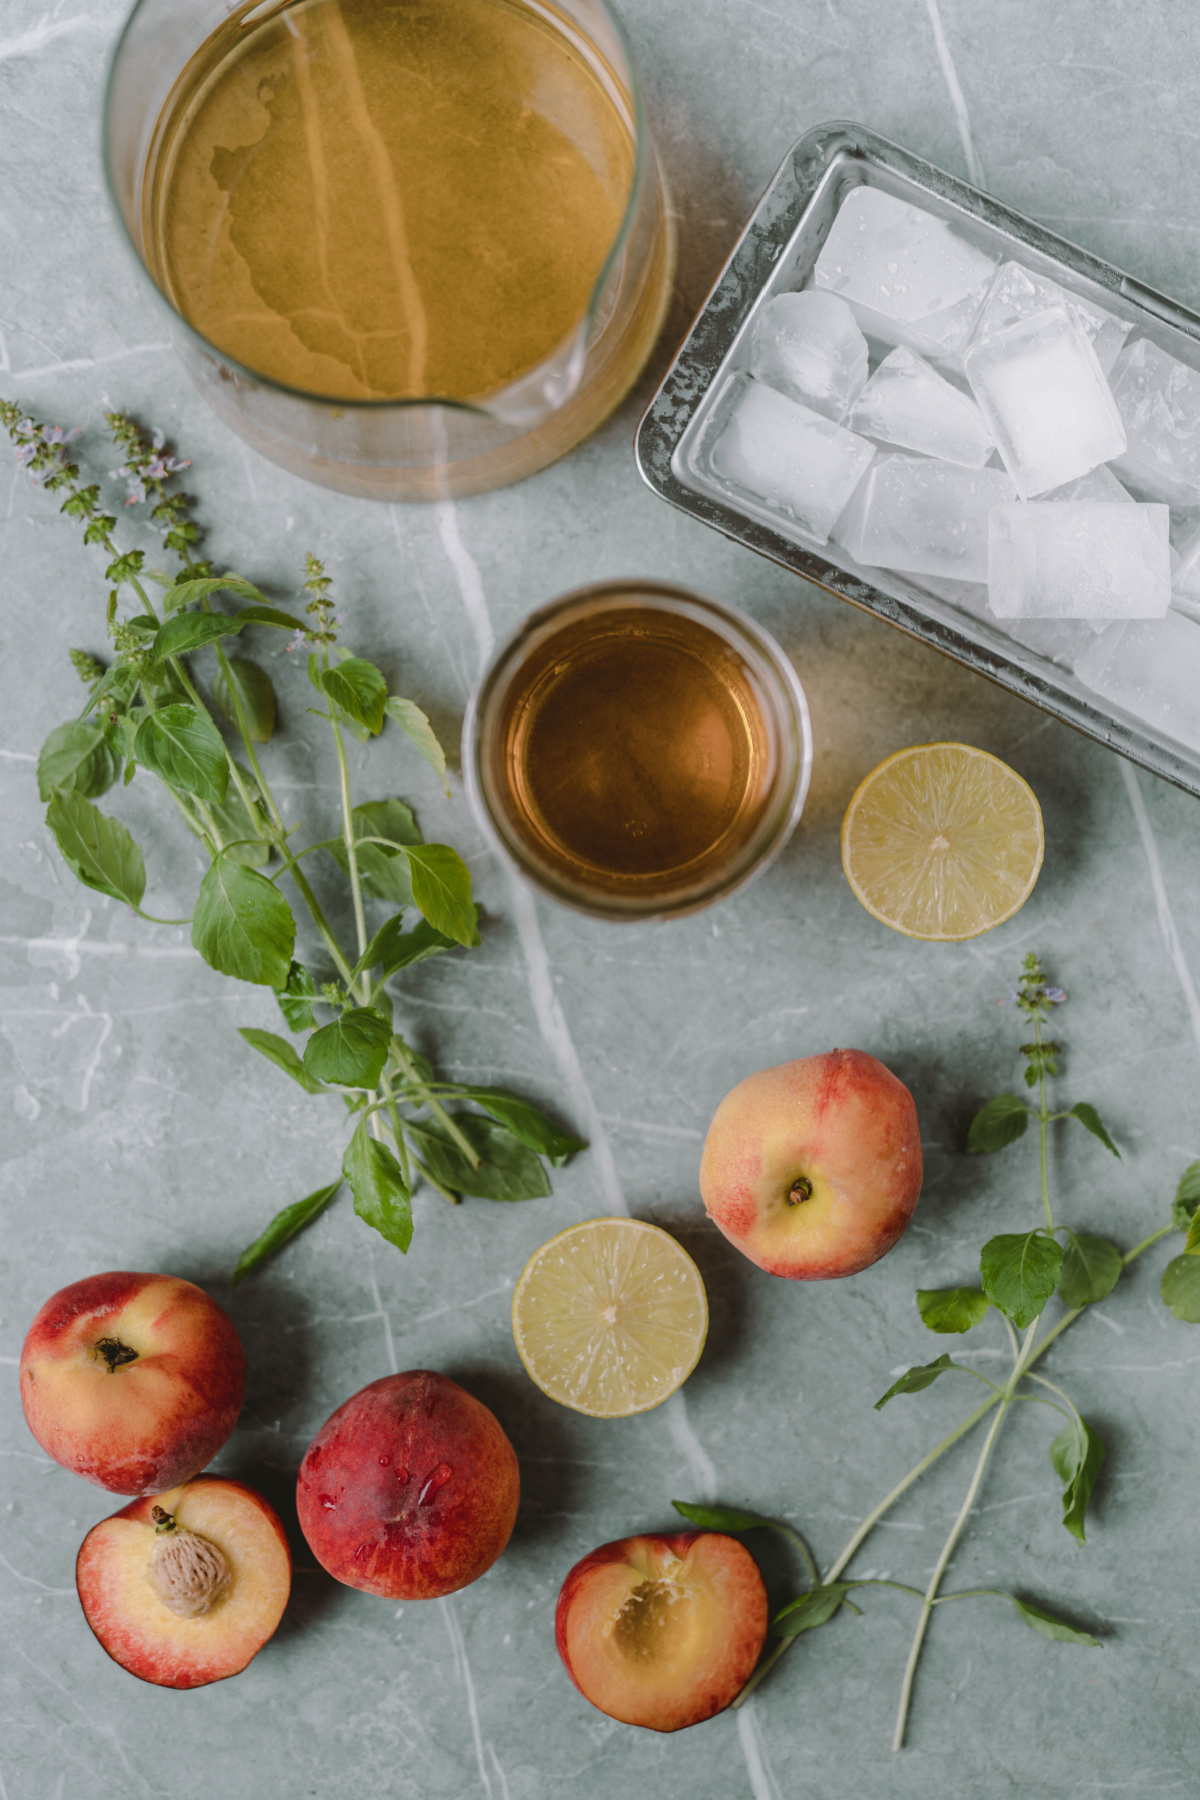 ingredients to make holy basil-peach drink